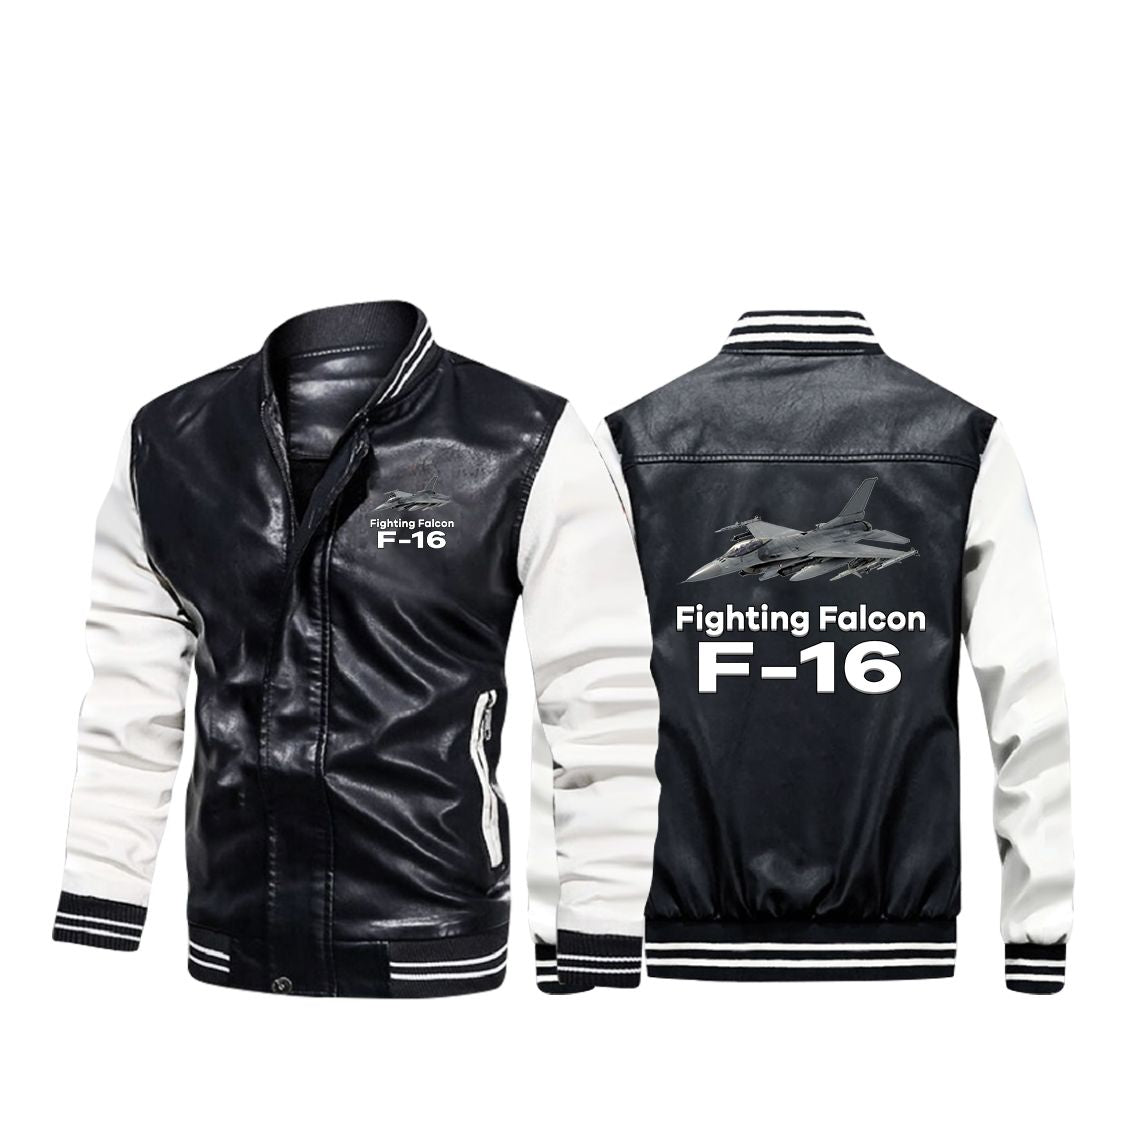 The Fighting Falcon F16 Designed Stylish Leather Bomber Jackets